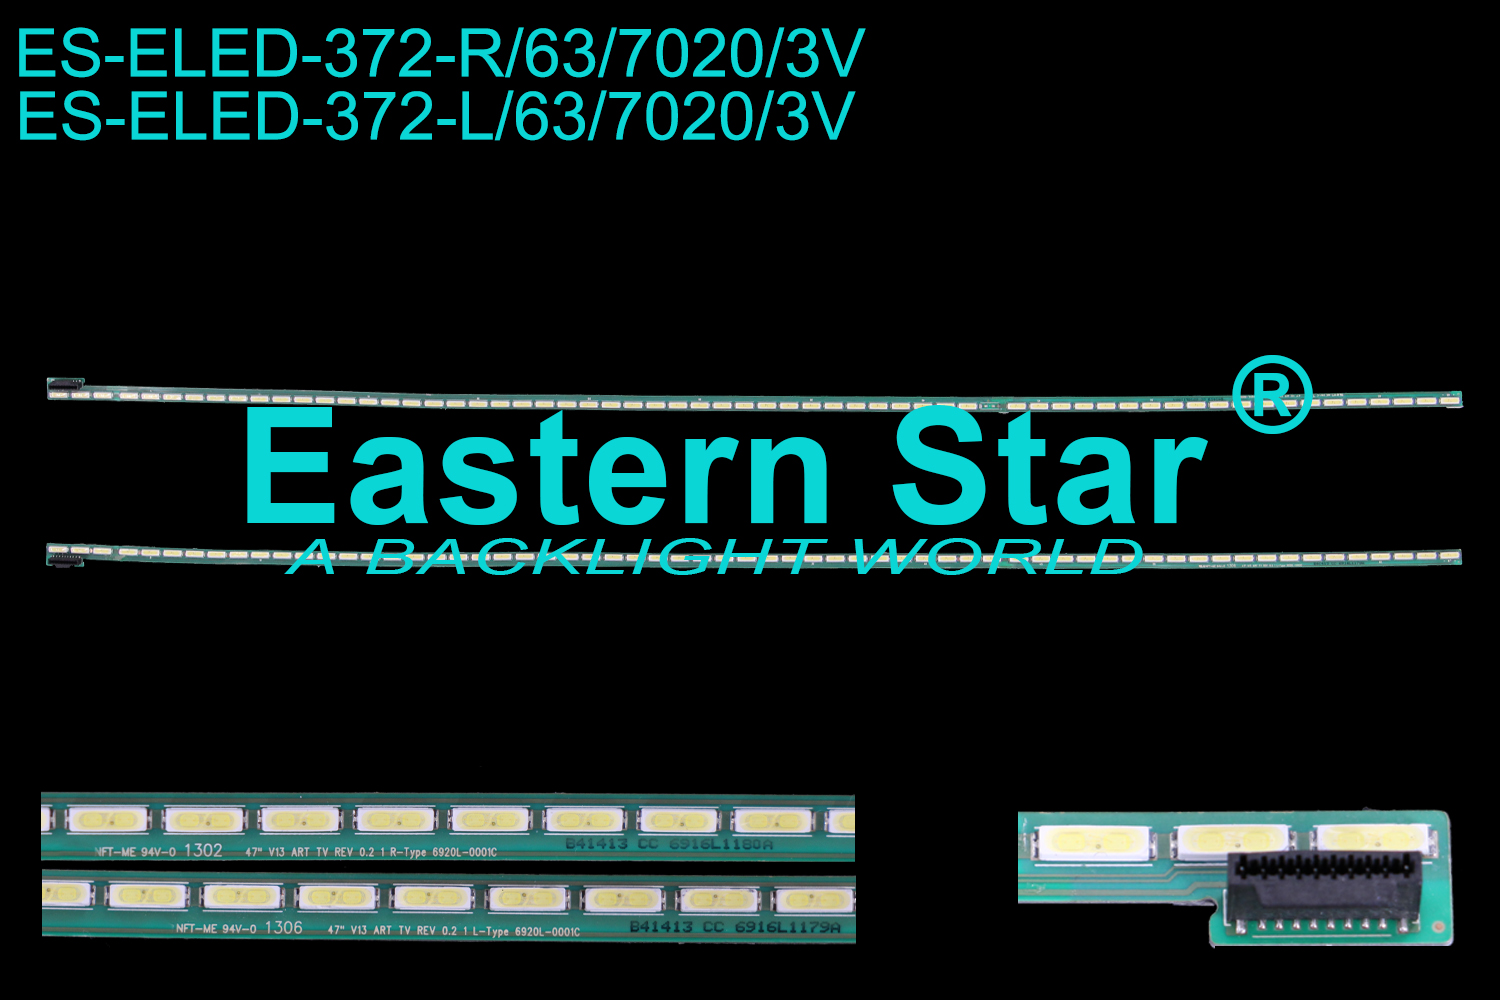 ES-ELED-372 ELED/EDGE TV backlight use for 47'' Lg 47LA860V 47LA690V 47" V13 ART TV REV 0.2 1 L/R-Type 6920L-0001C  B41413  CC 6916L1179A LED STRIPS(2)